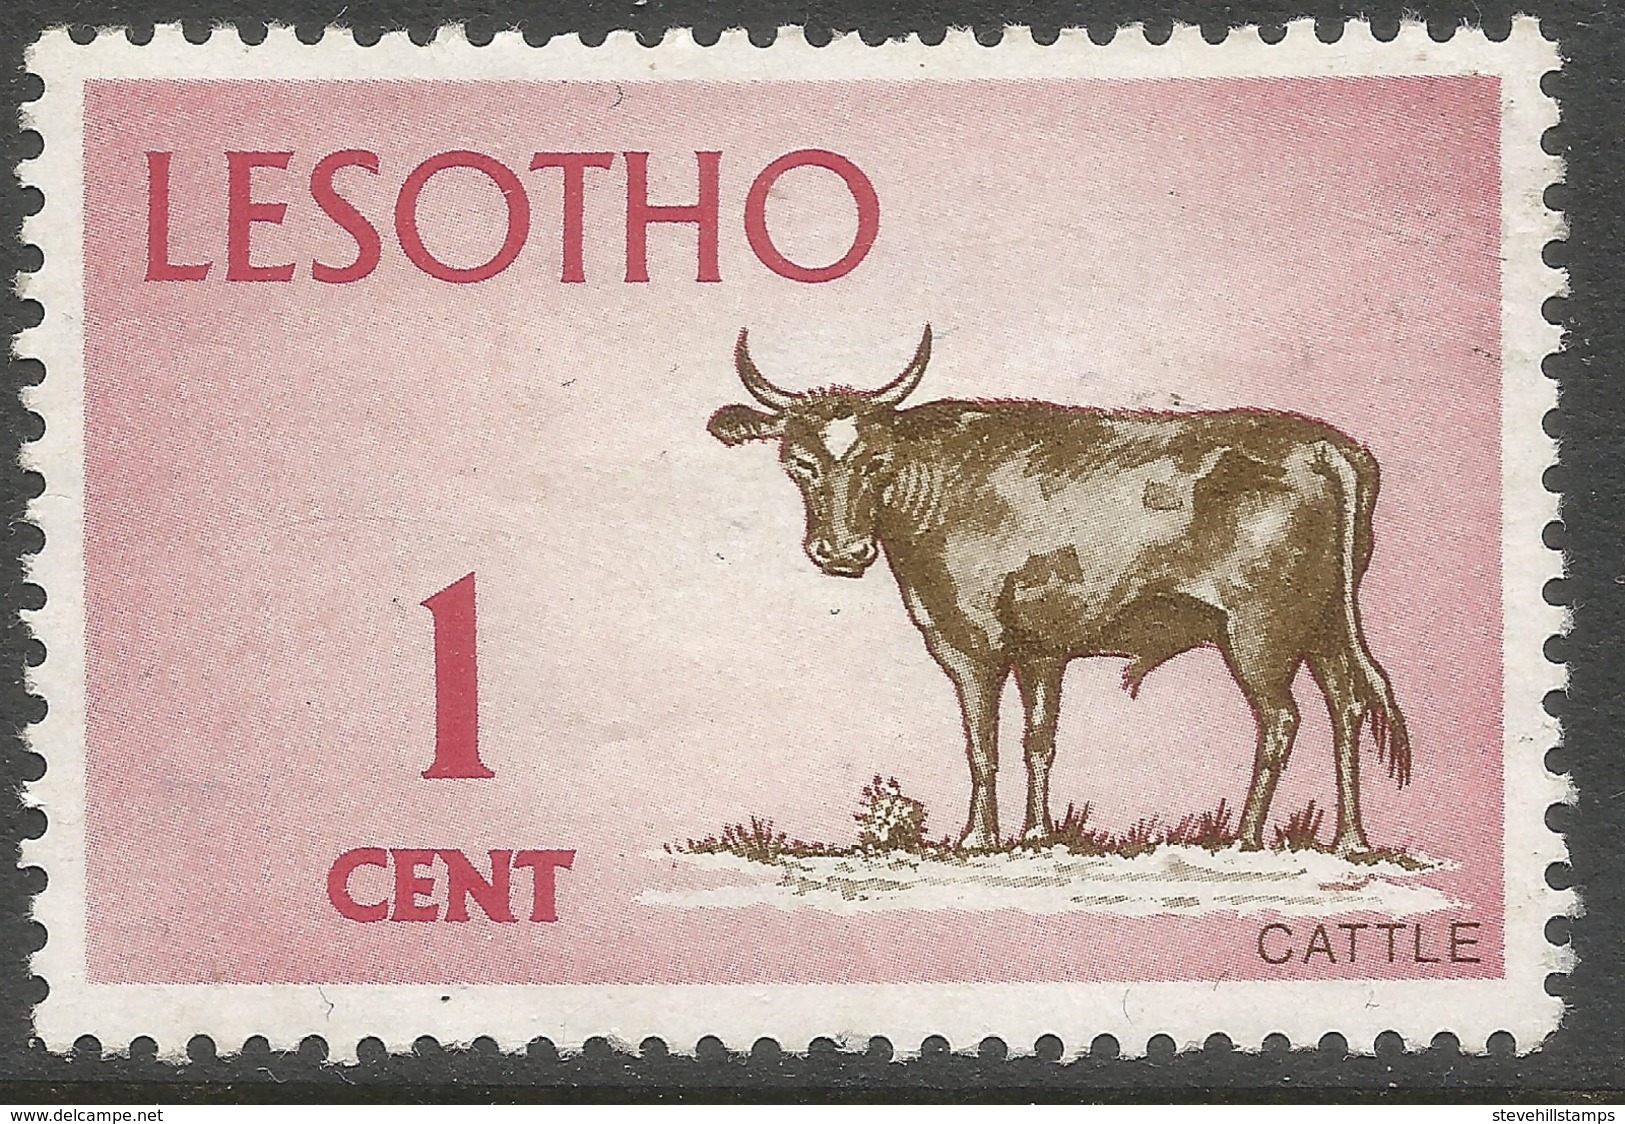 Lesotho. 1971 Definitives. 1c MH. SG 192 - Lesotho (1966-...)